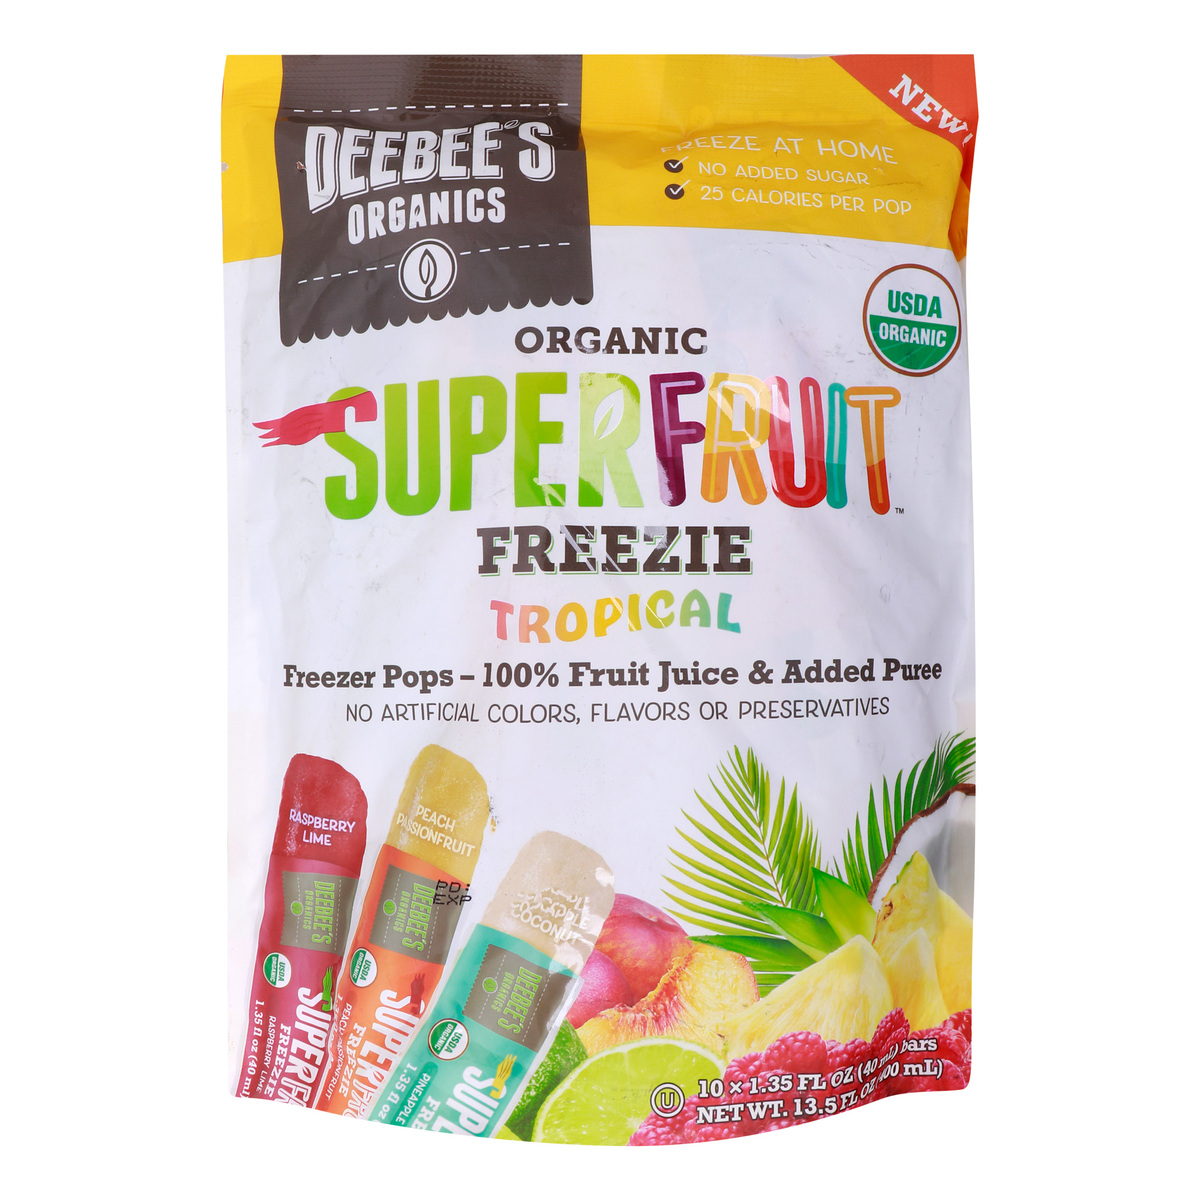 Deebee’s Organics Super Fruit Freezie, Freezer Pops with Fruit Juice & Added Puree, 10 x 40 ml